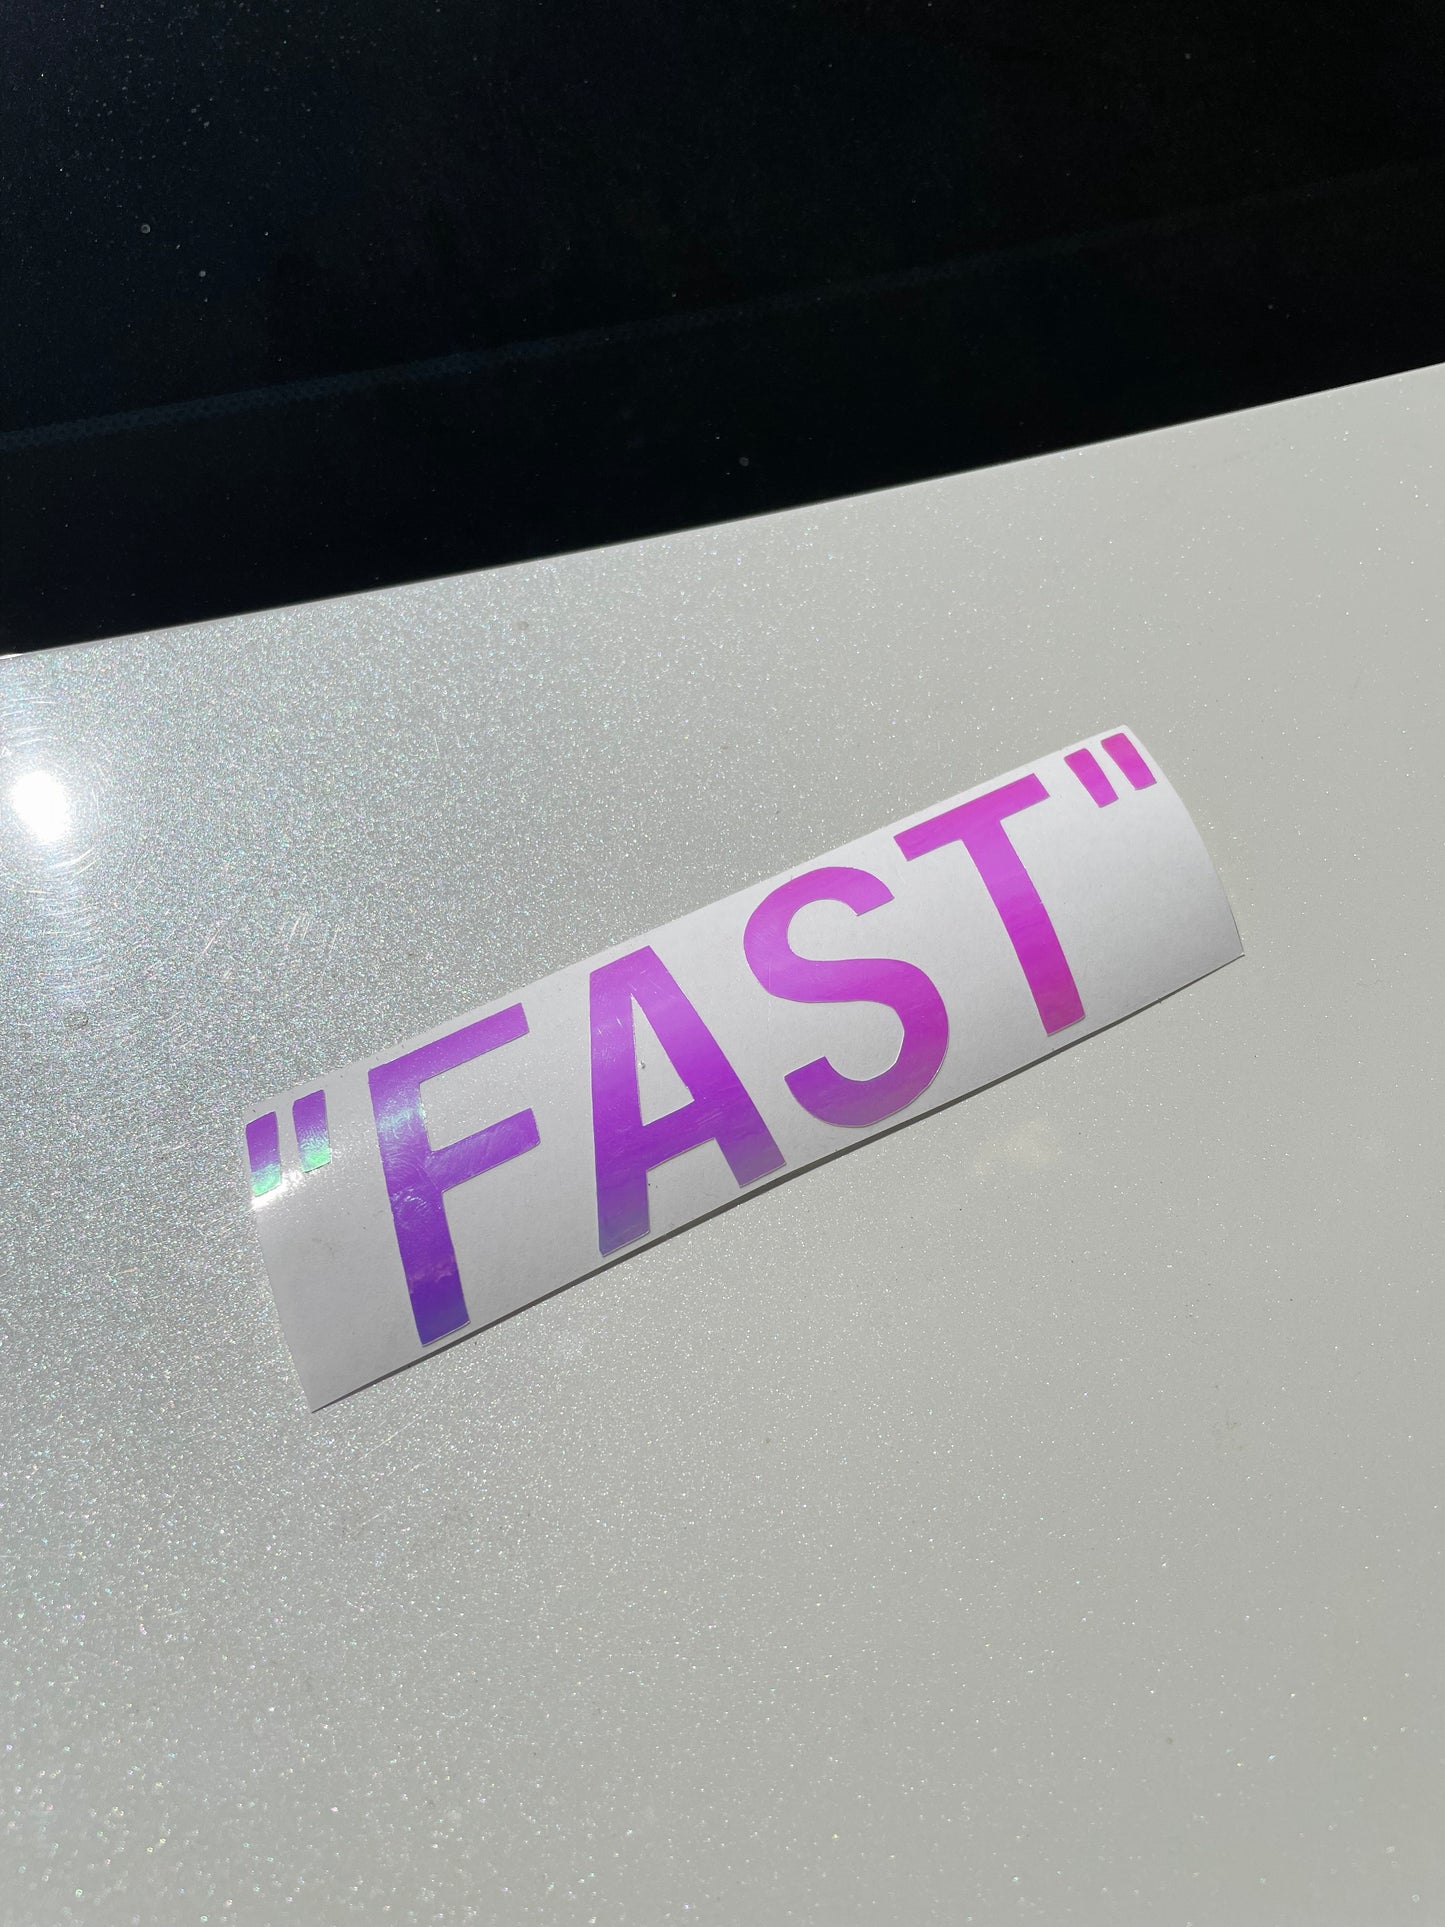 “Fast”